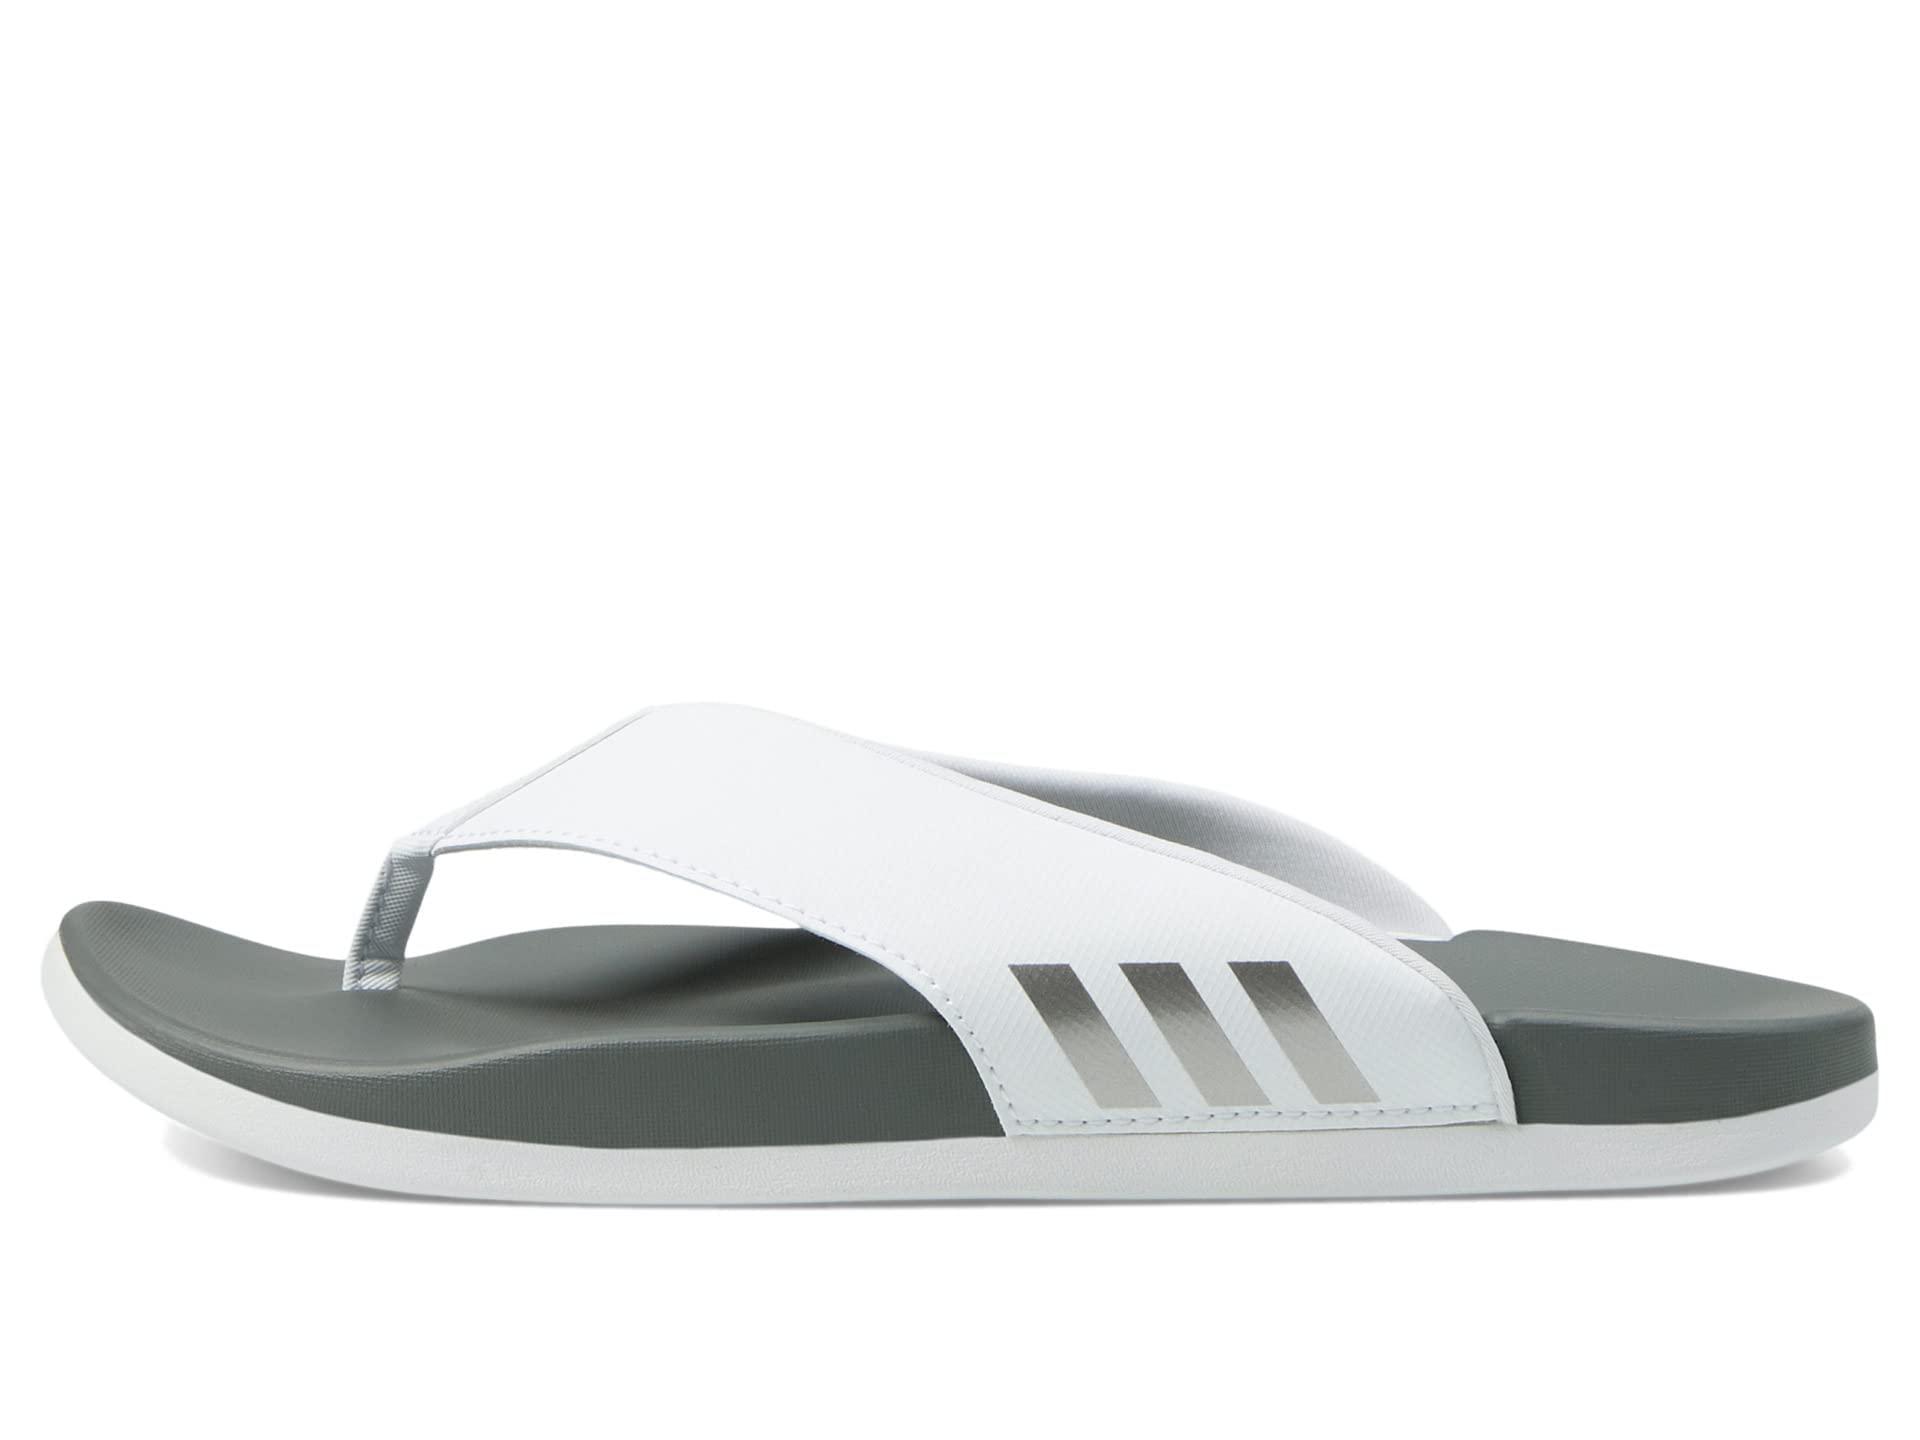 adidas Adilette Comfort Flip-flop White/taupe Metallic 9 B in Gray | Lyst